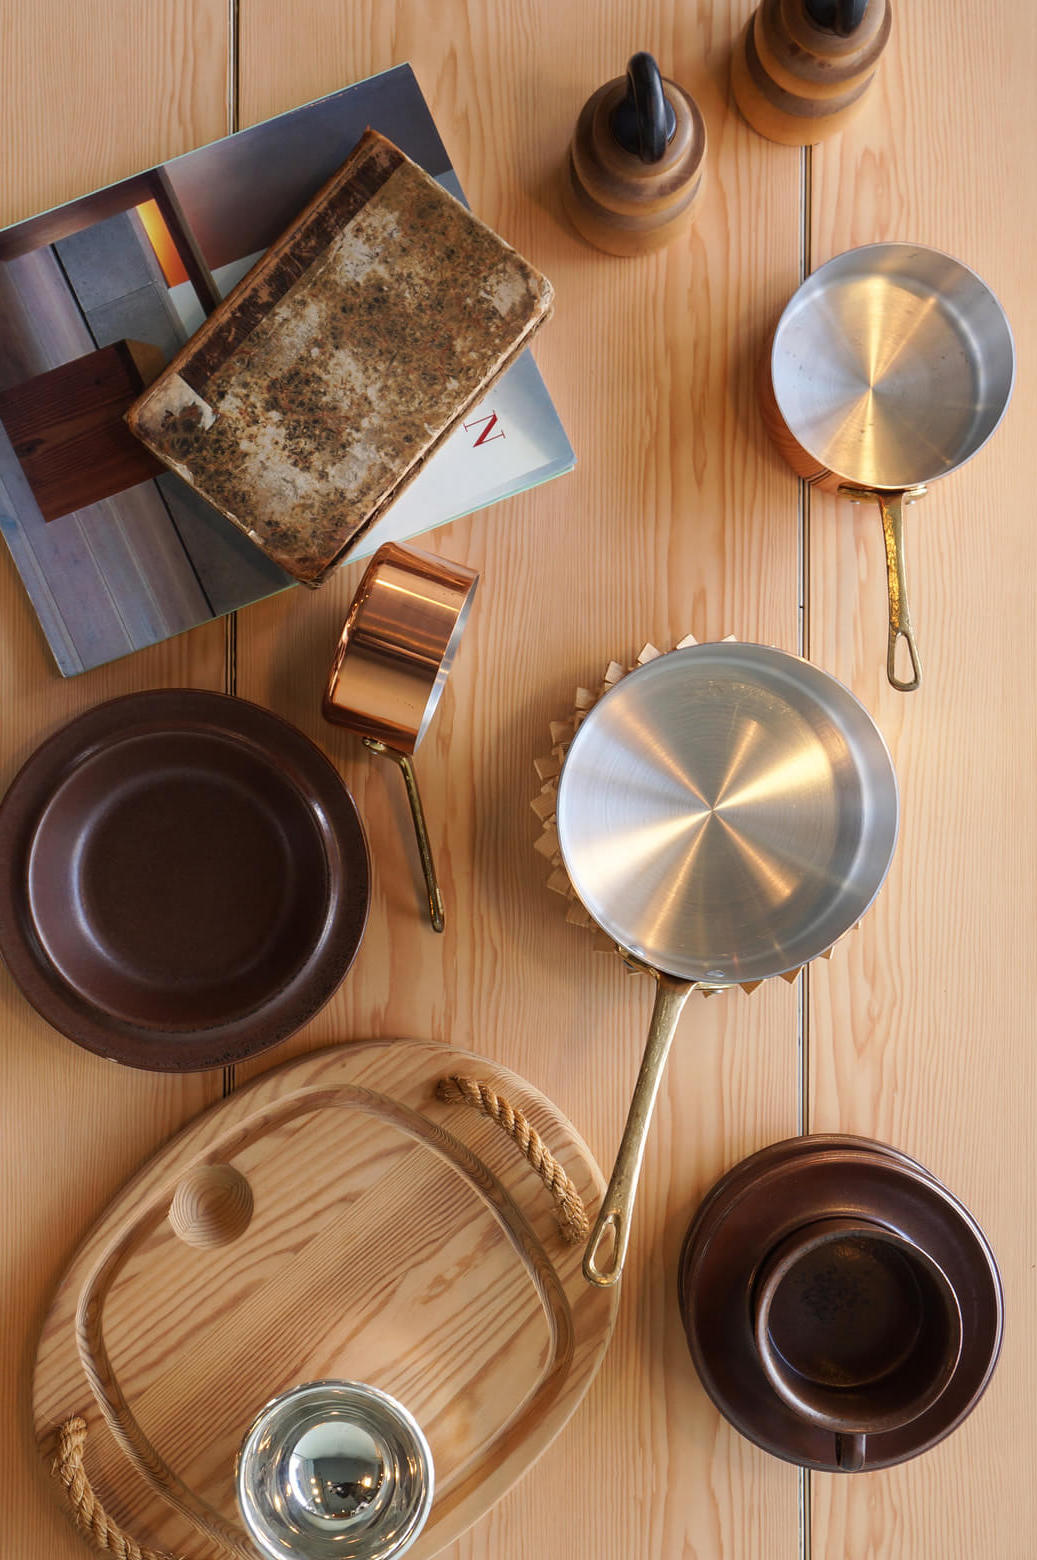 Les Cuivres De Faucogney Copper Pan Set Made In France/フランス製 銅製 片手鍋 セット フライパン キッチン雑貨 レトロ